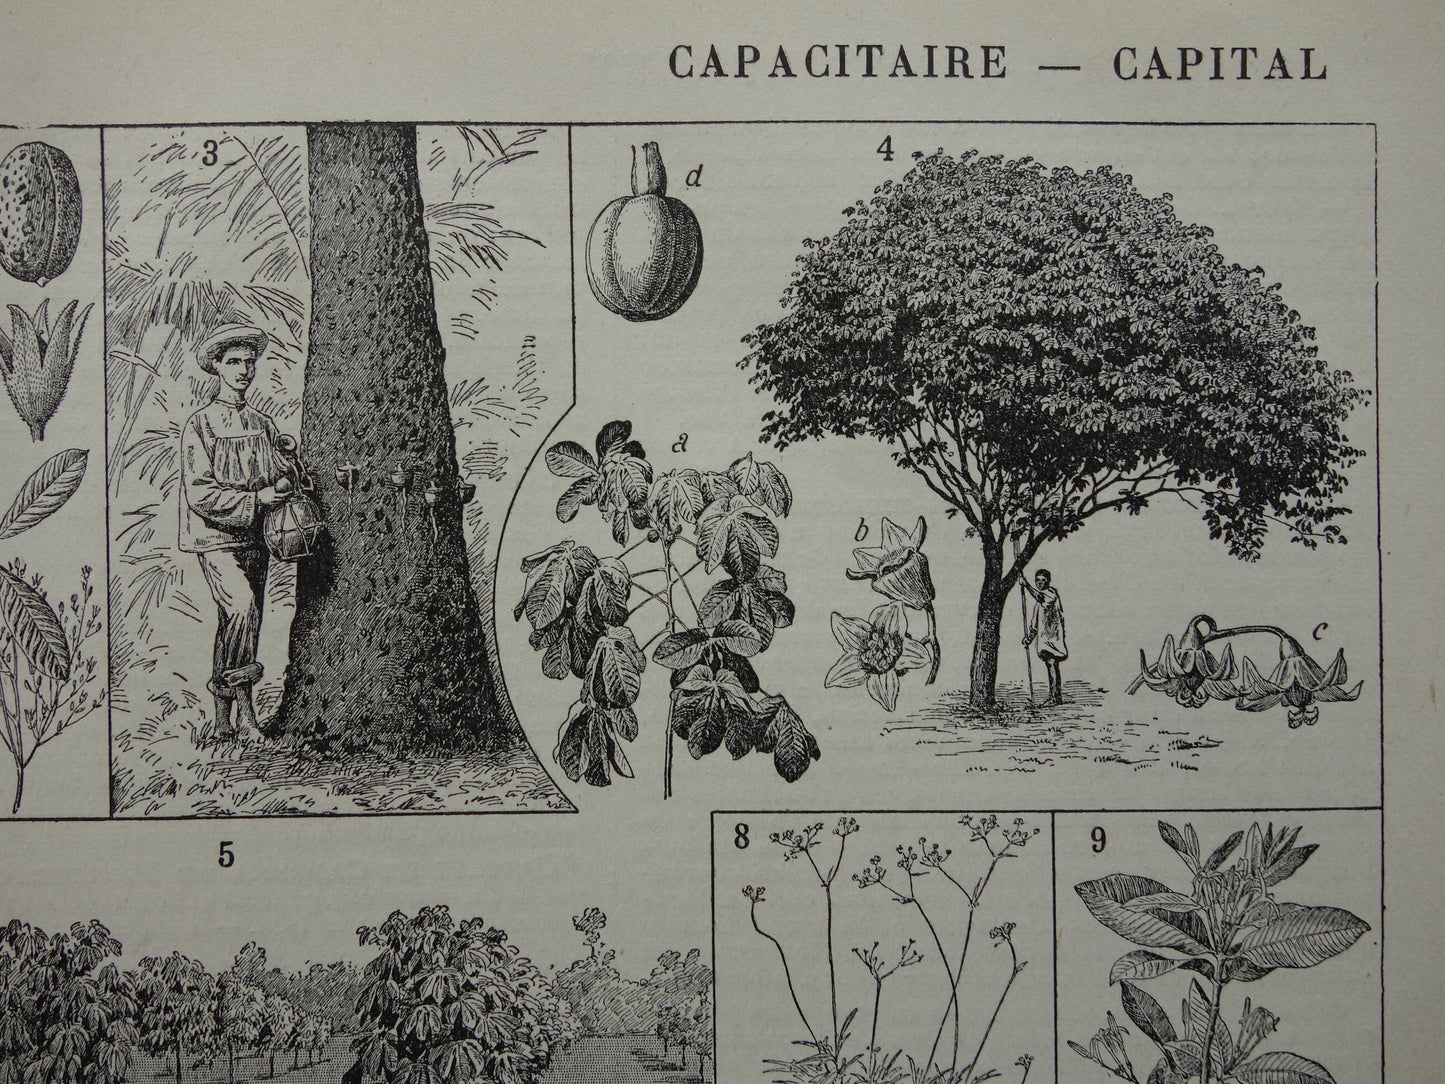 Rubberboom oude botanische prent Rubberplant Originele antieke illustratie rubber productie plantage